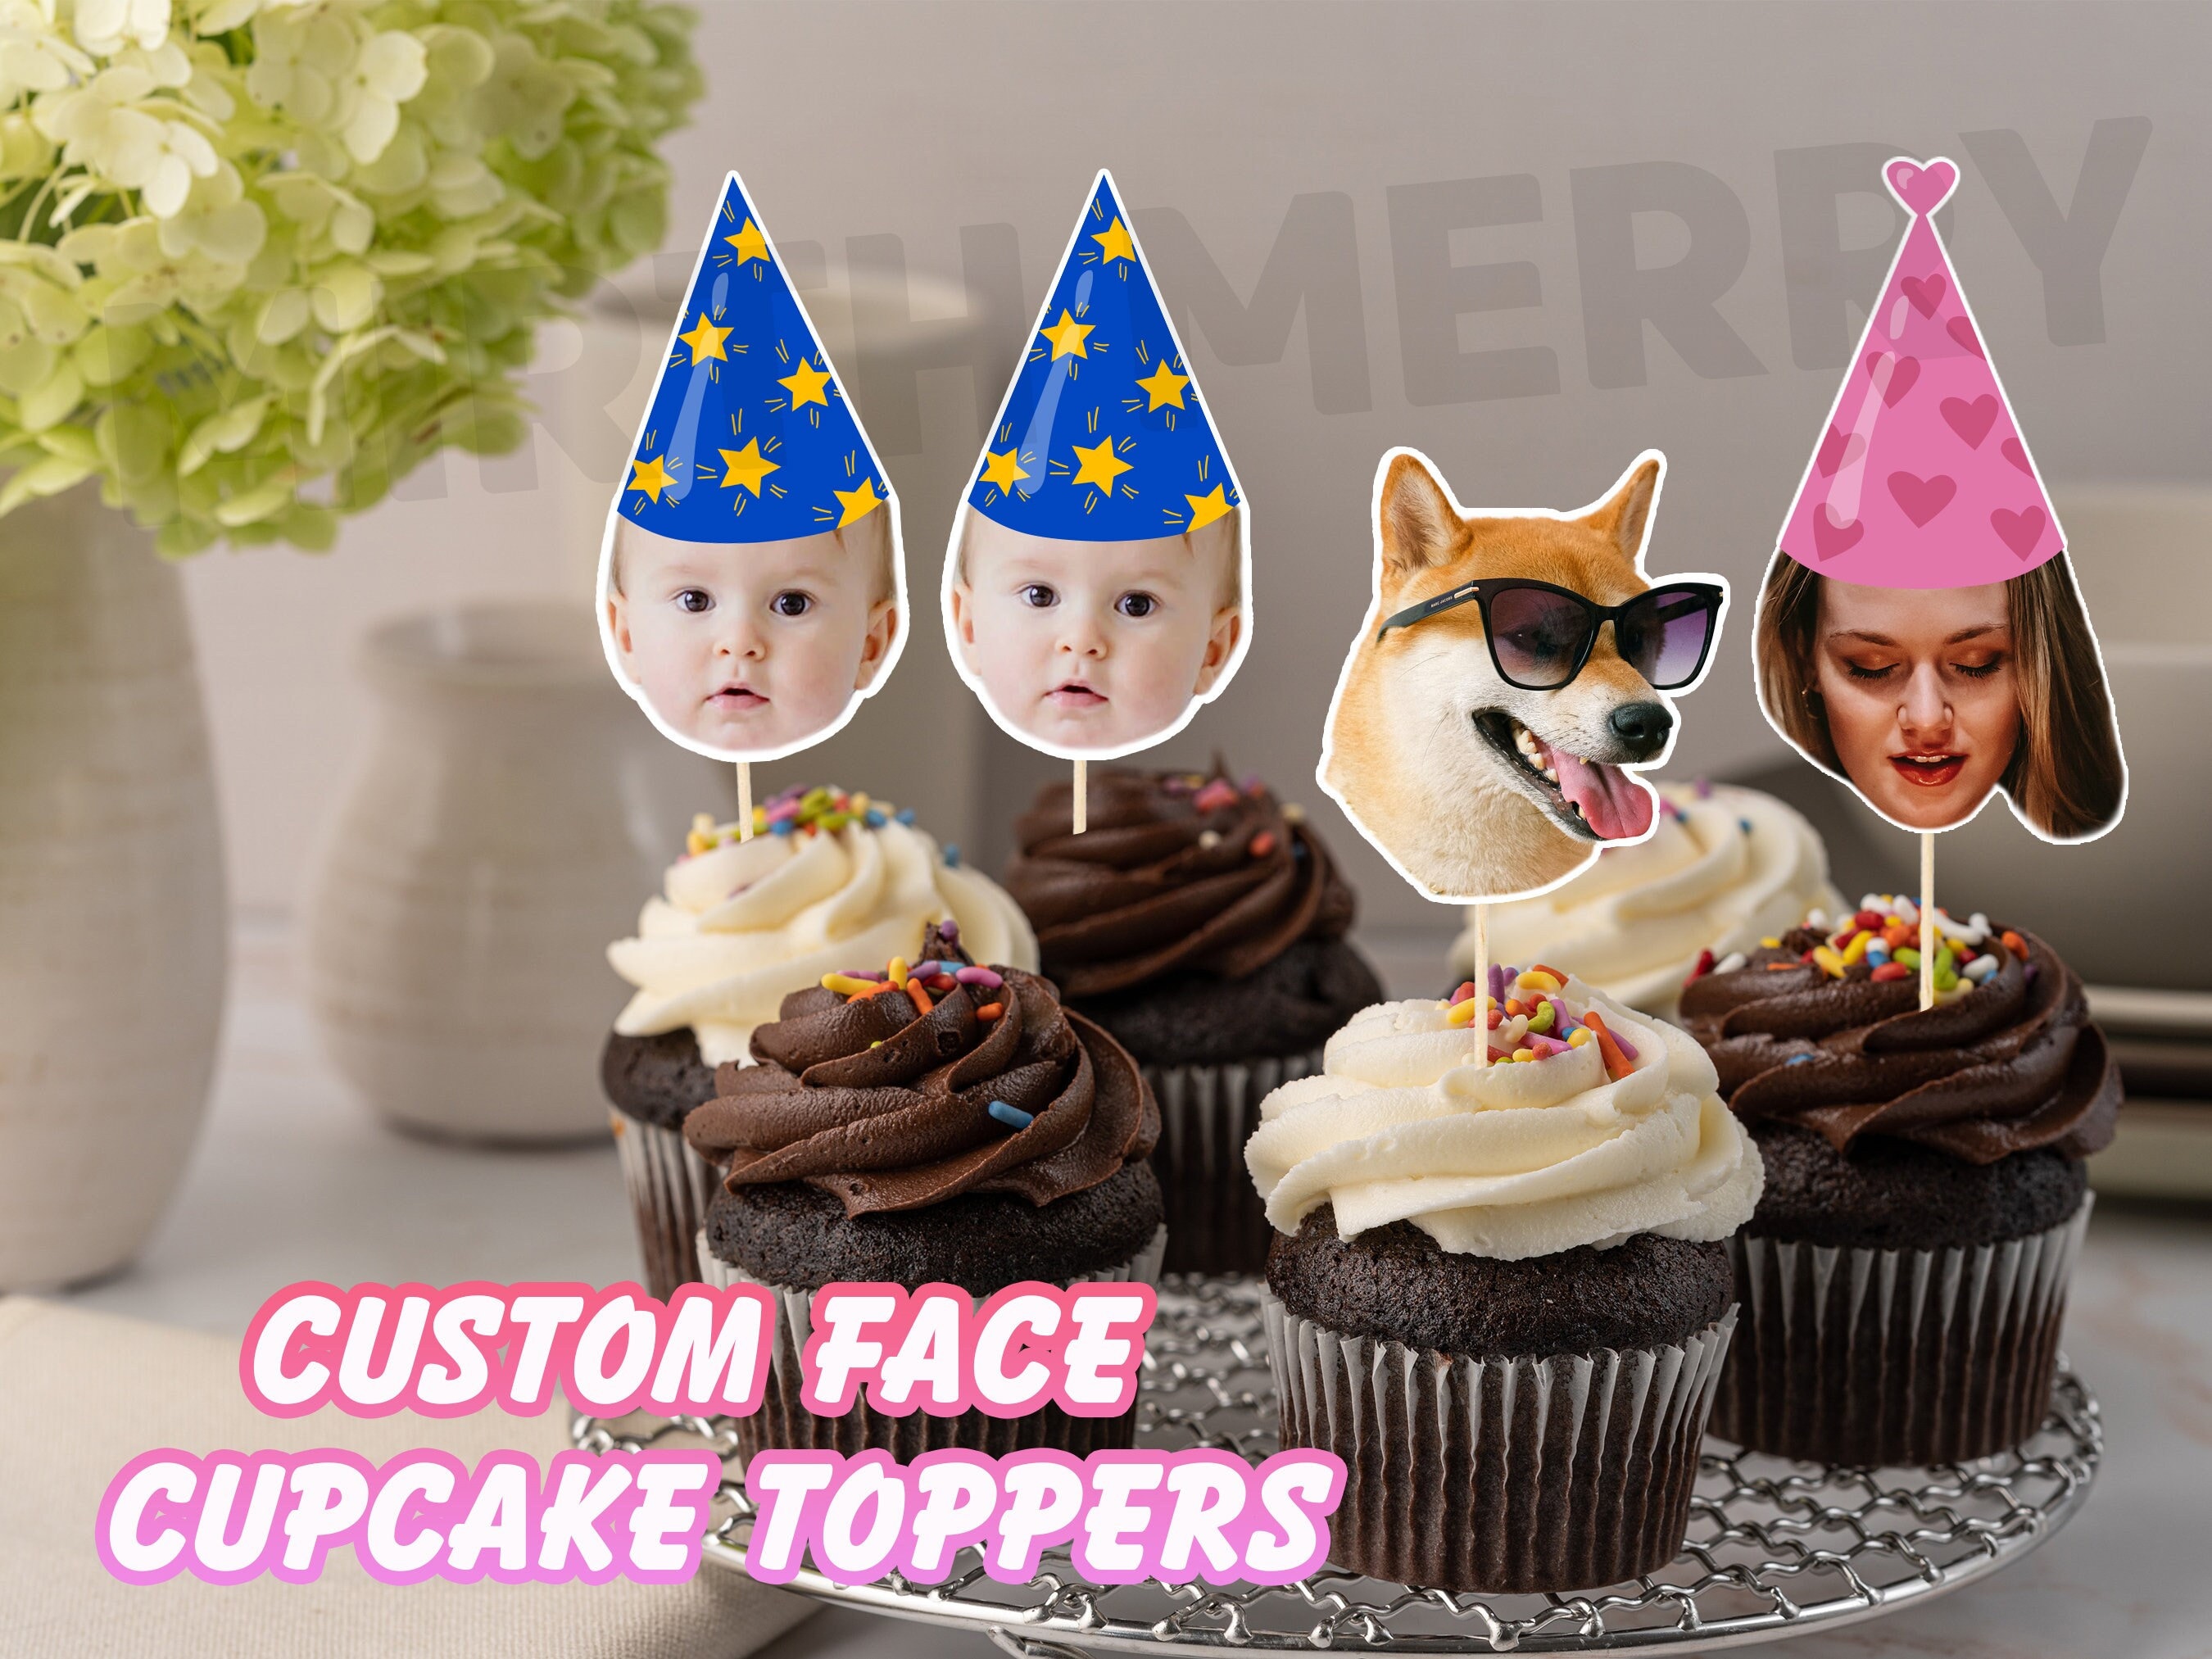 DIY: Edible Cupcake Toppers